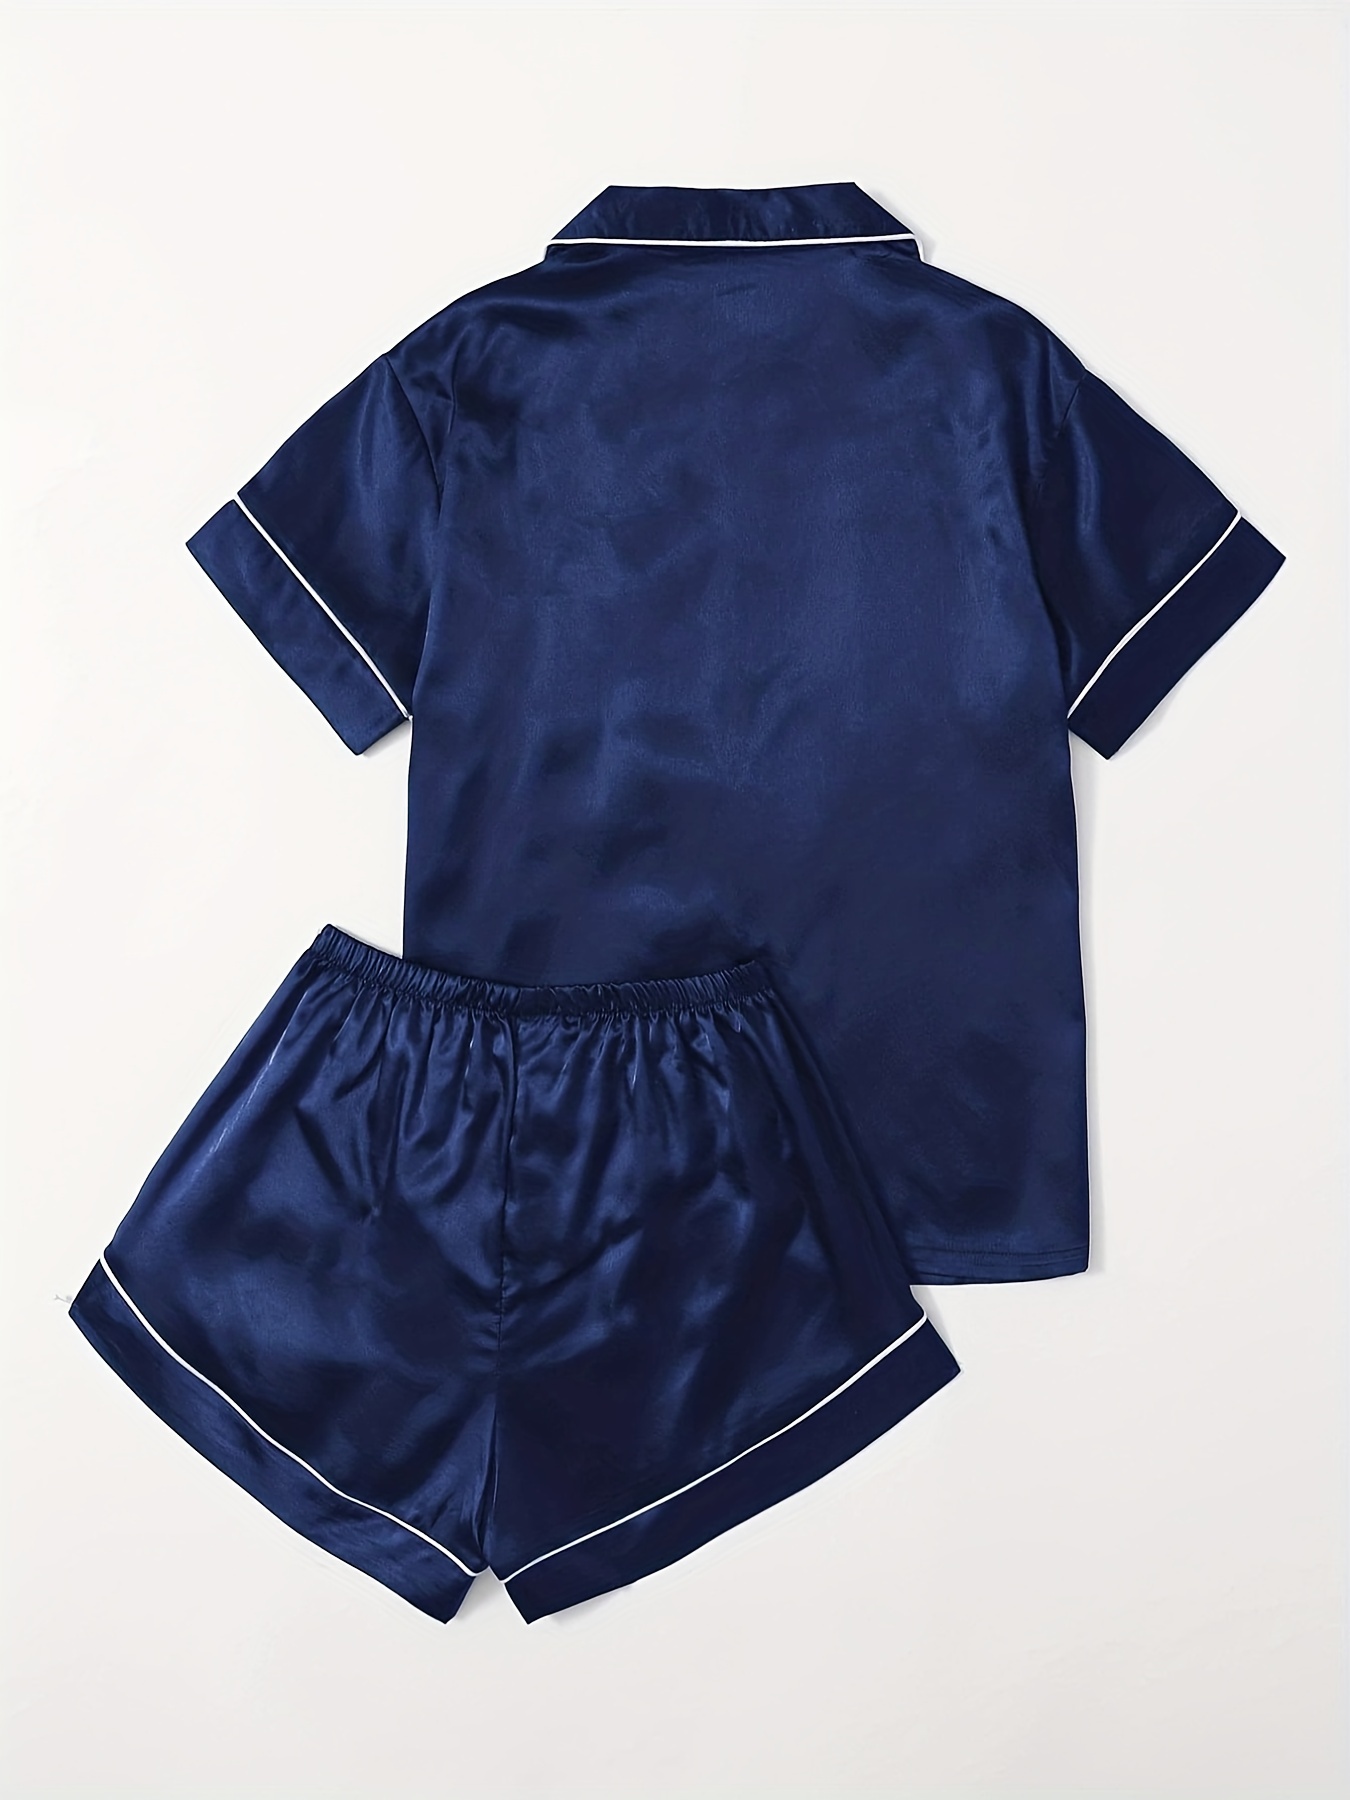 Navy Blue Silk Shorts Sleepwear Set Women – Pajamas Canada